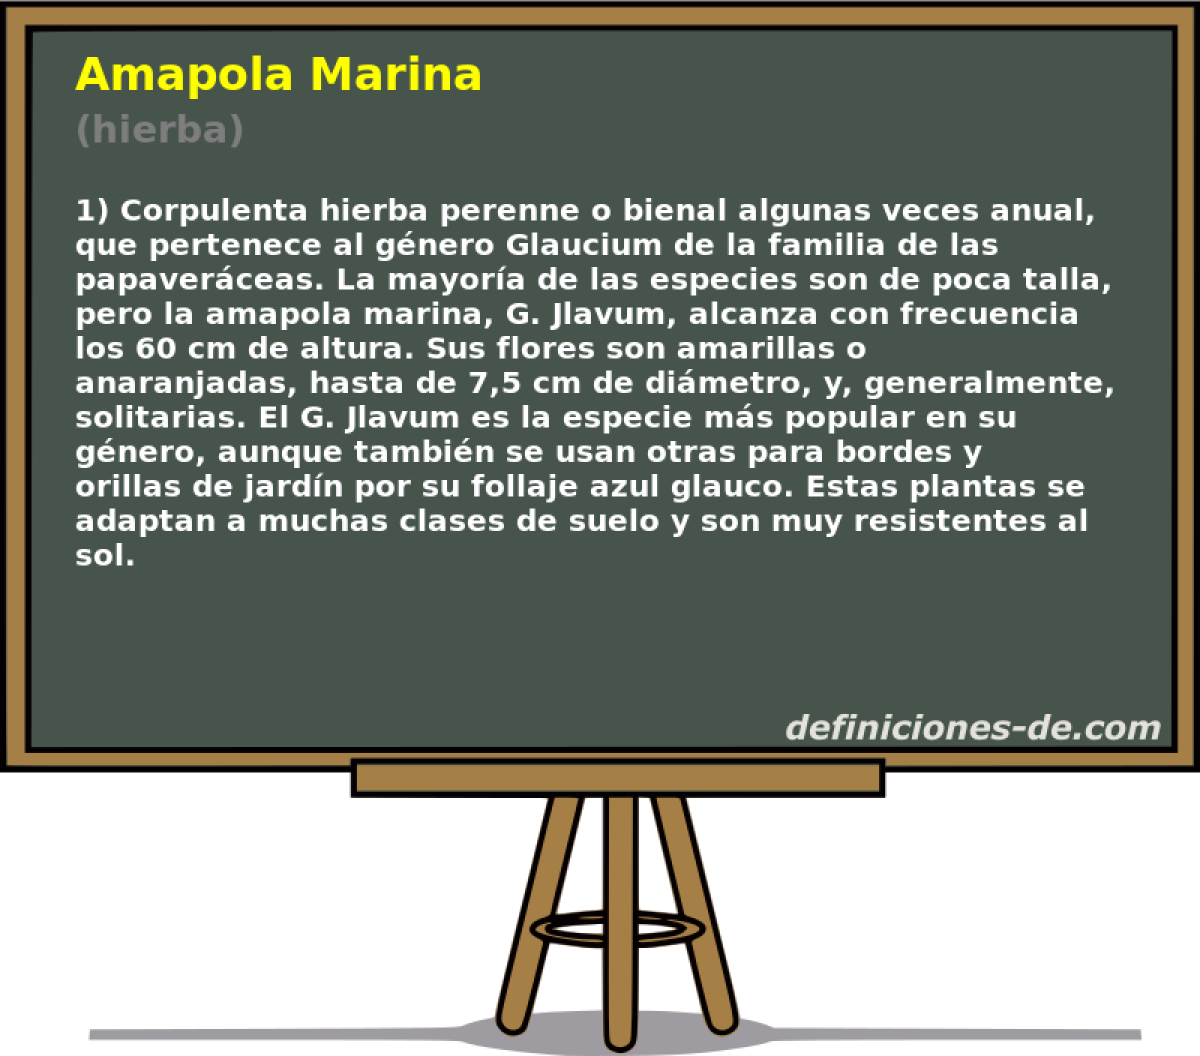 Amapola Marina (hierba)